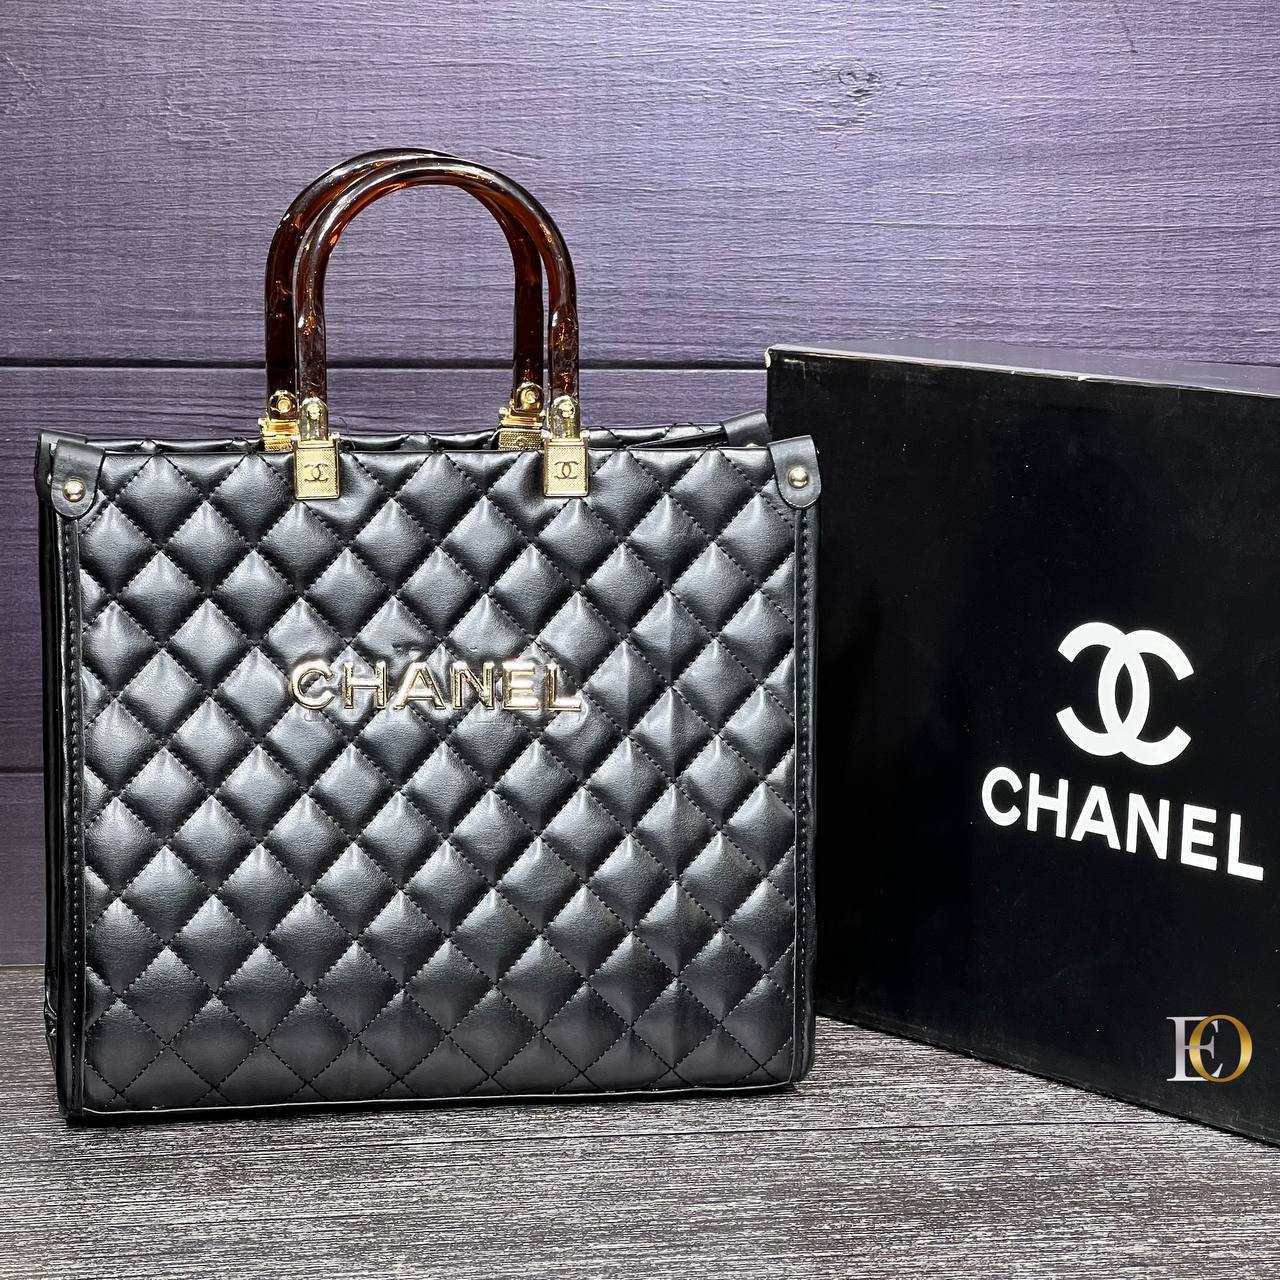 Chanel book tote bag